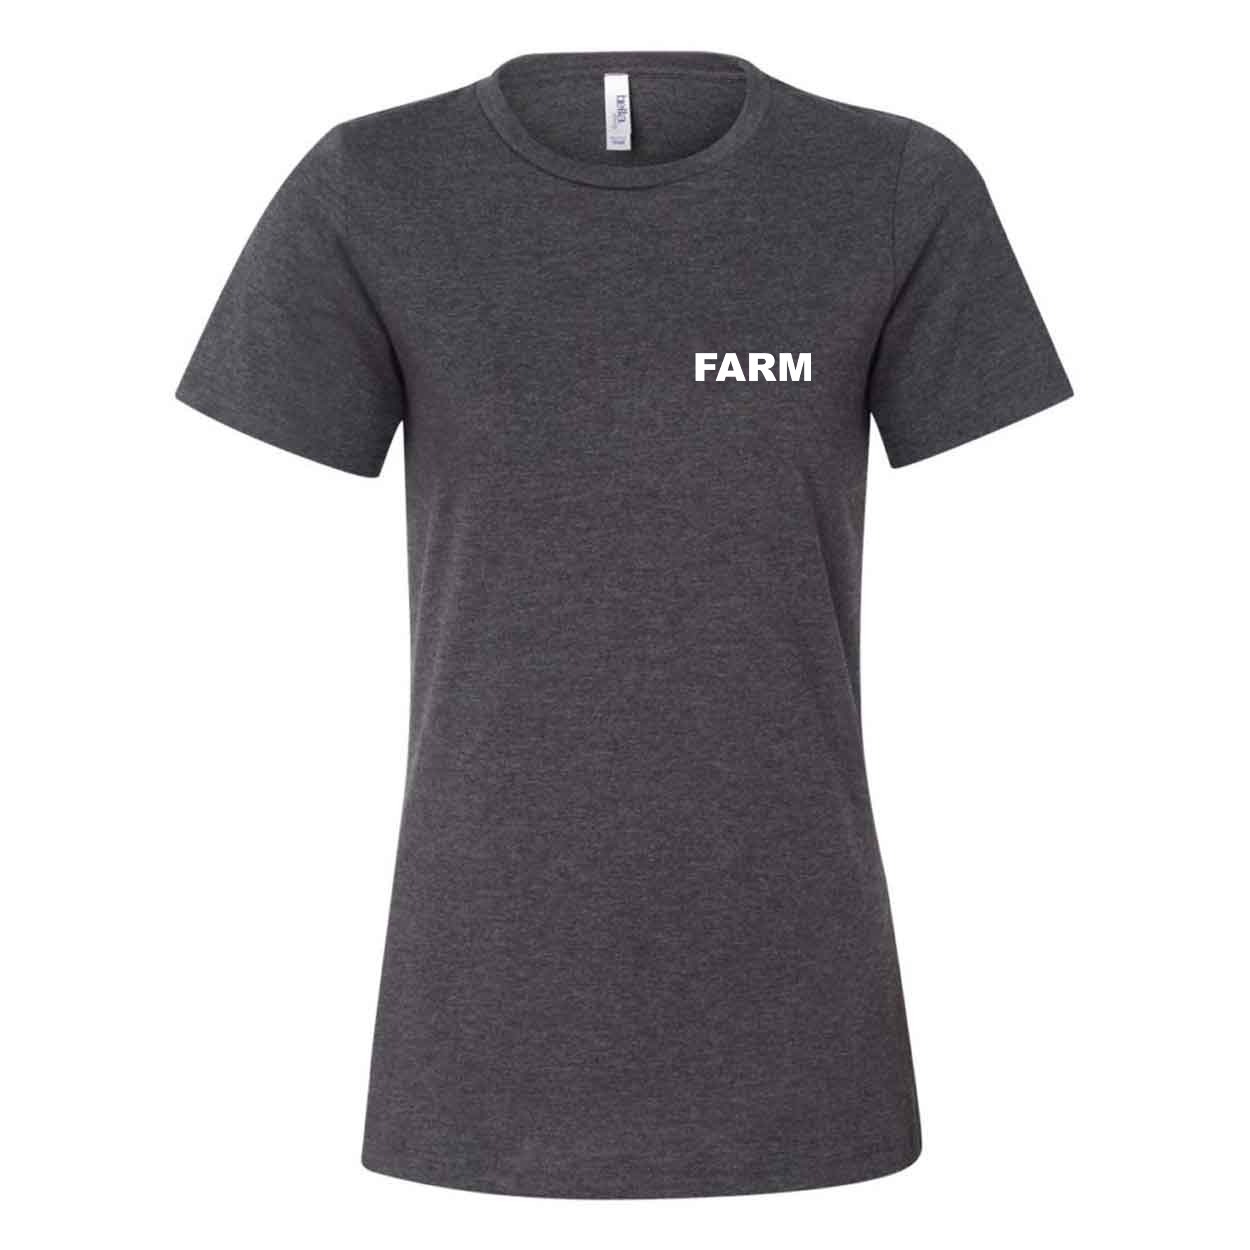 Farm Brand Logo Women's Night Out Relaxed Jersey T-Shirt Dark Gray Heather